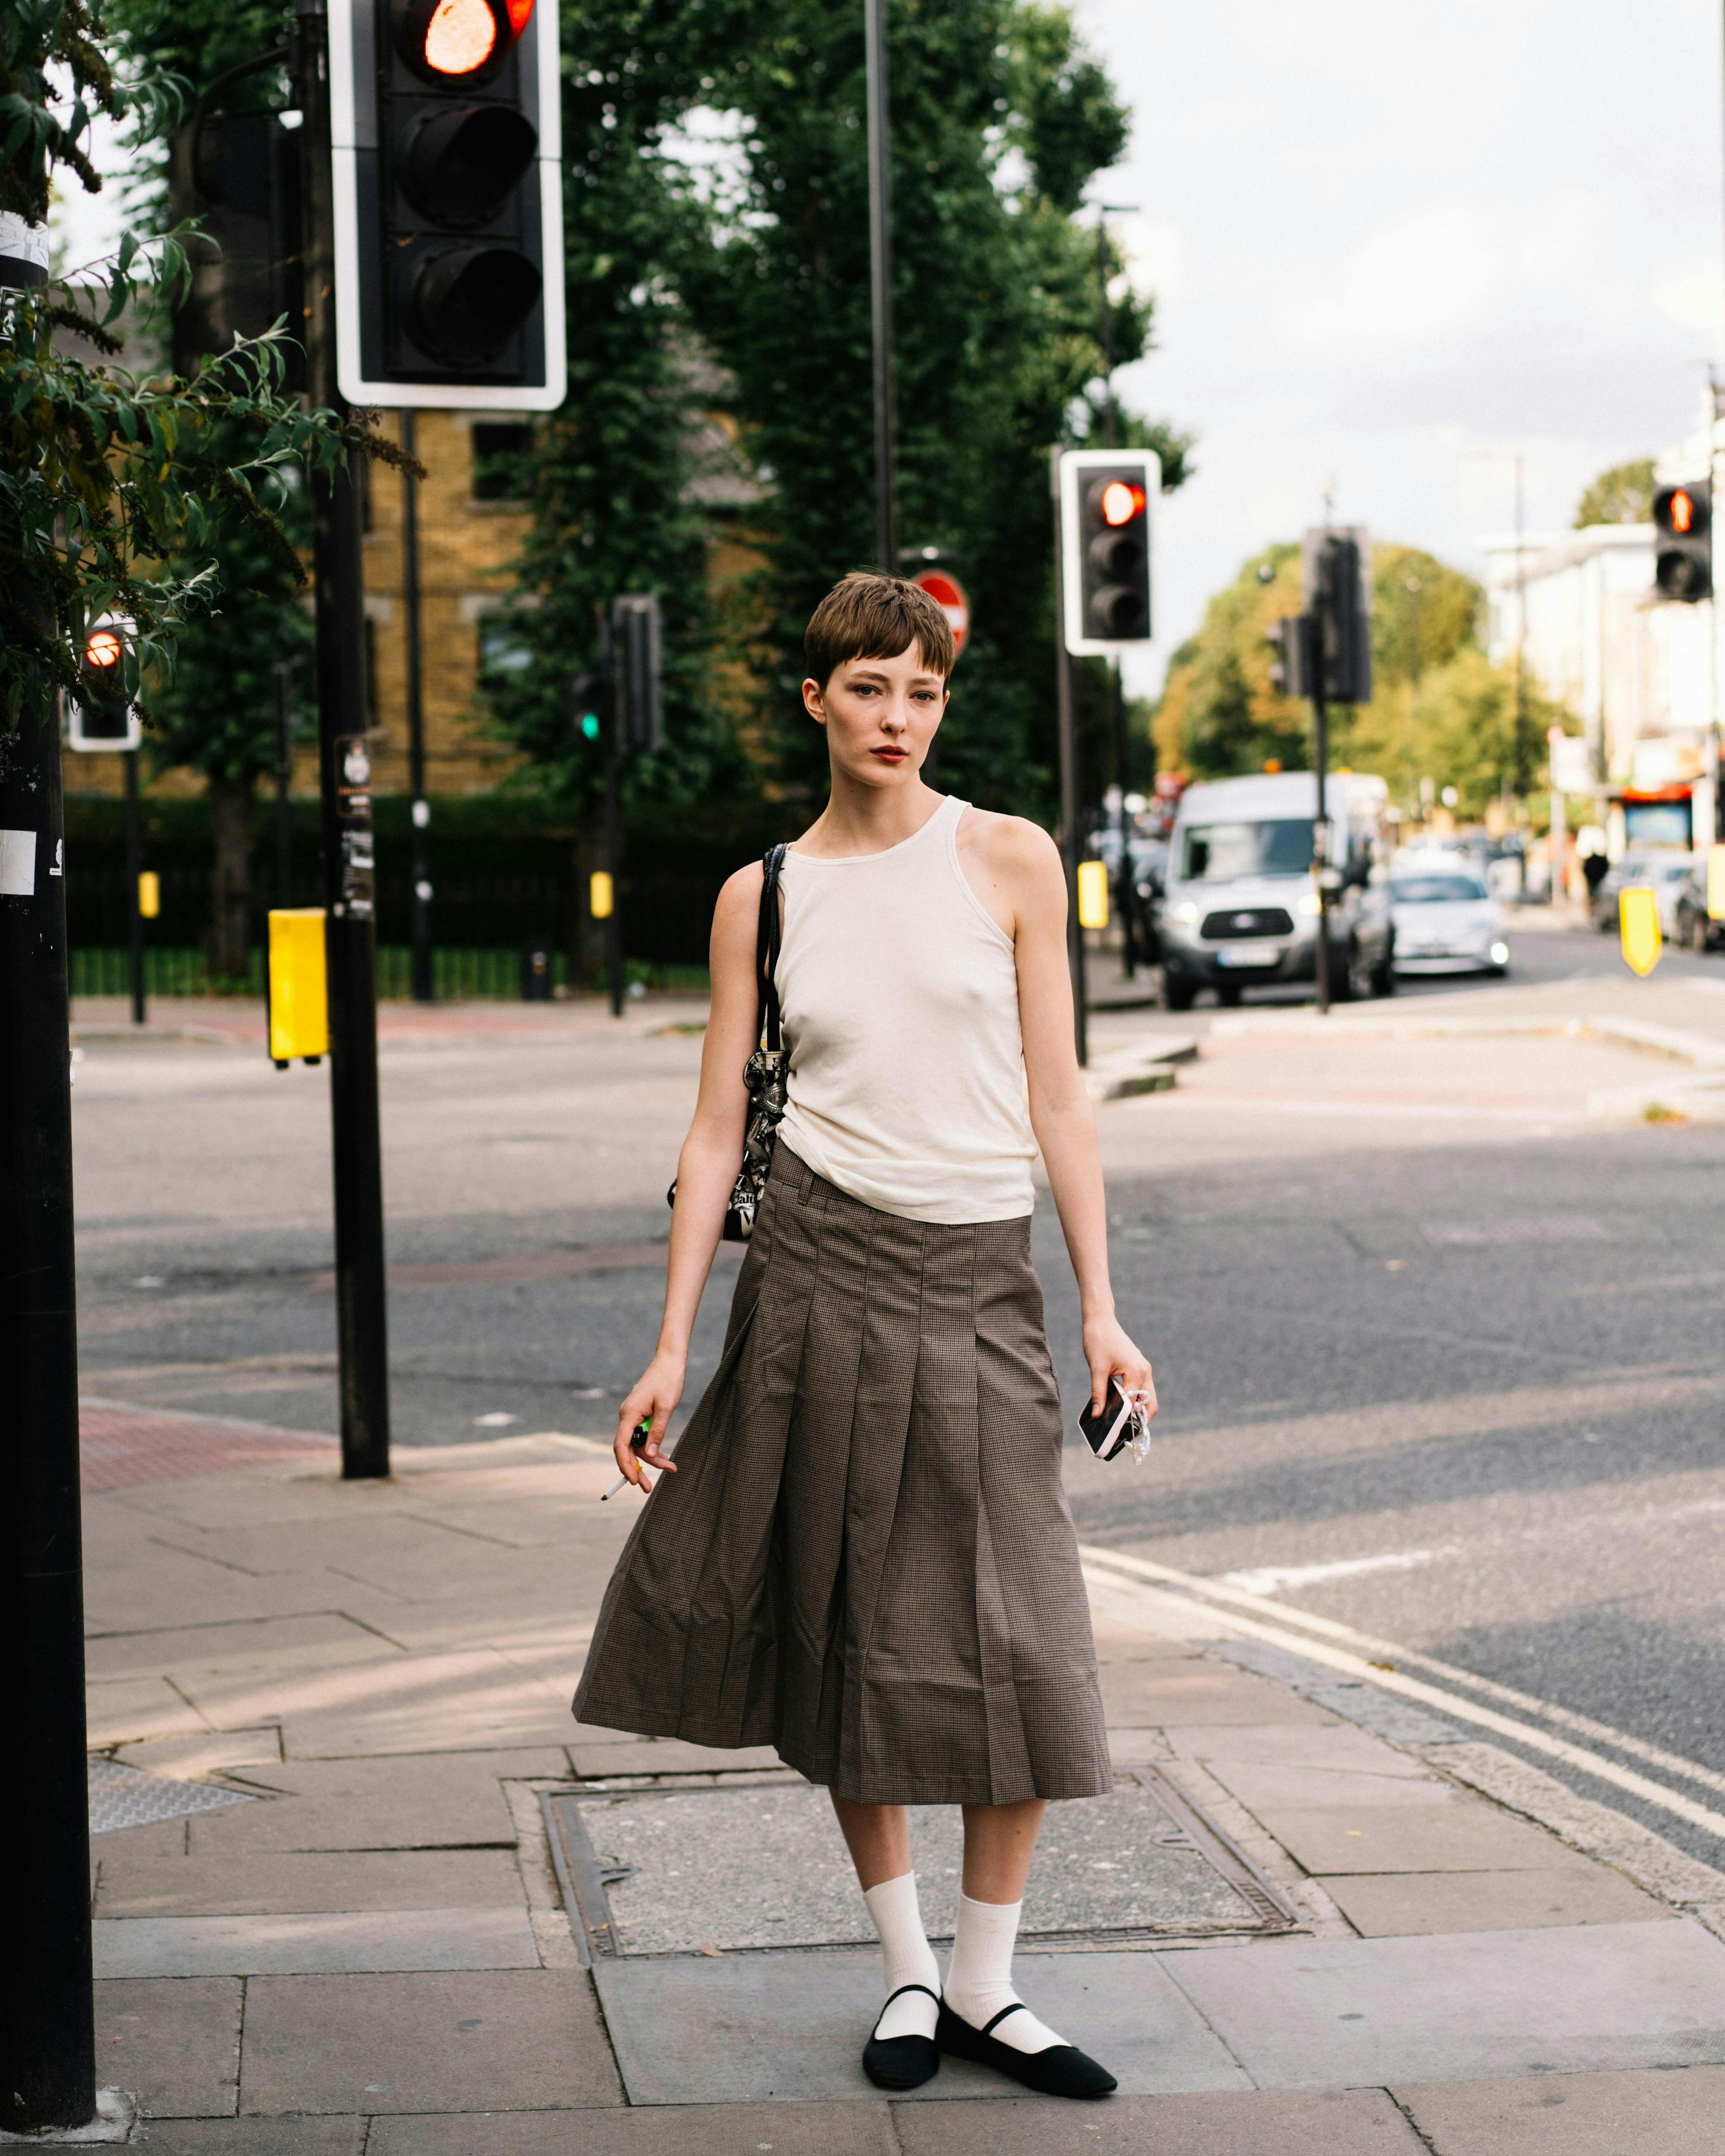 clothing skirt light traffic light person accessories bag handbag